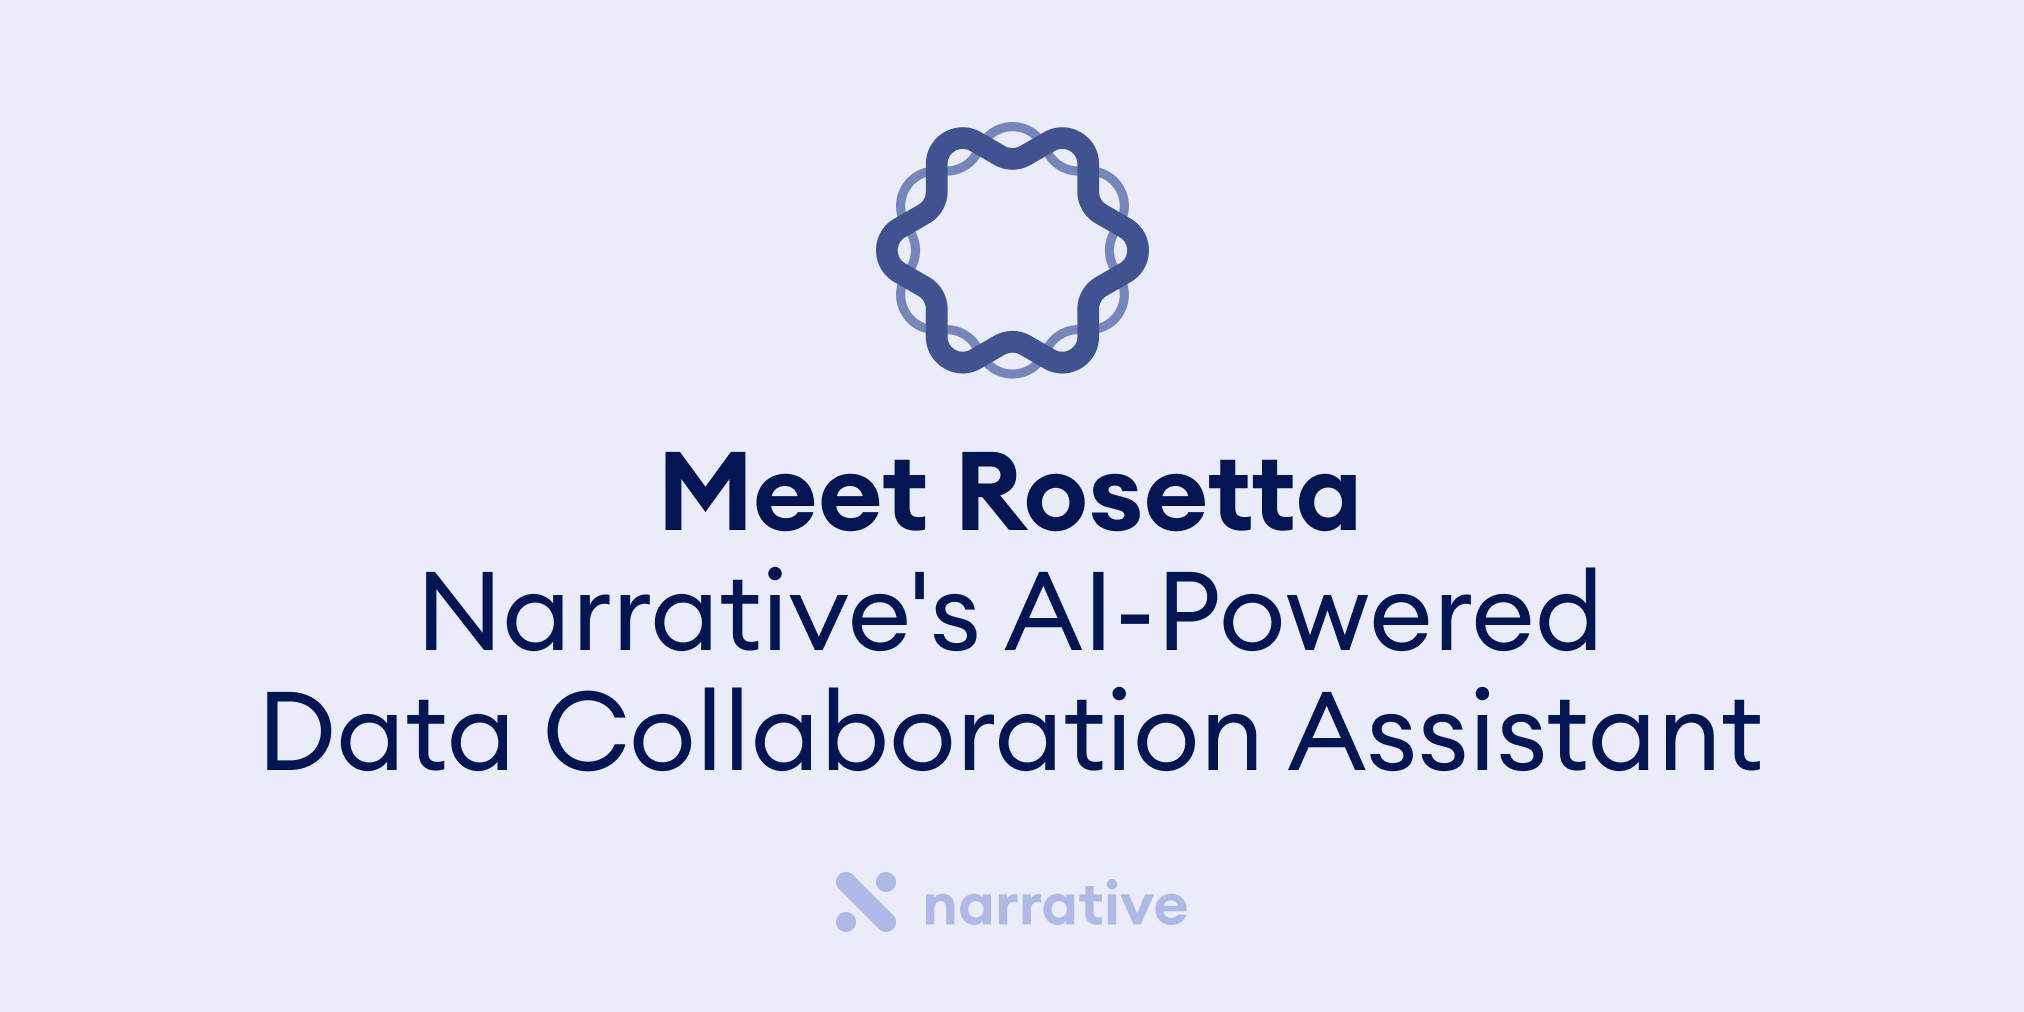 Meet Rosetta: Narrative's AI-Powered Data Collaboration Assistant